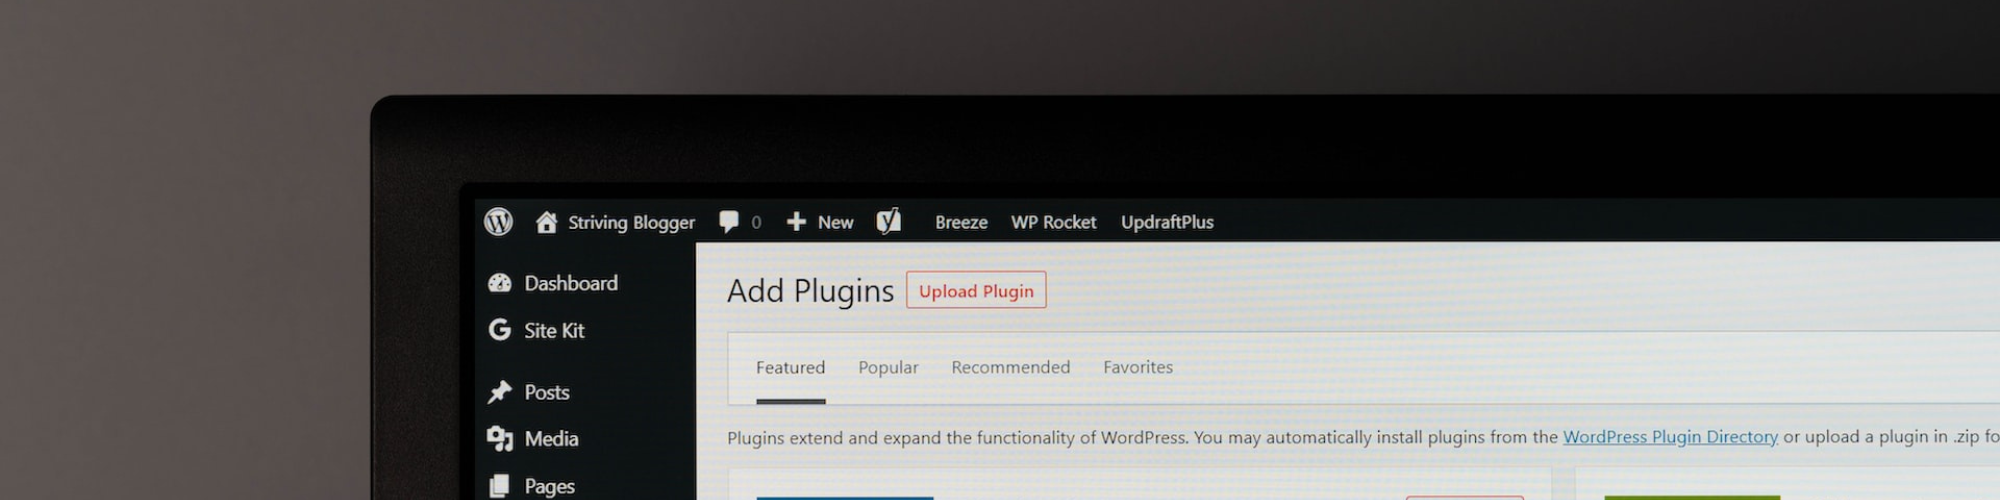 Wordpress hosting options